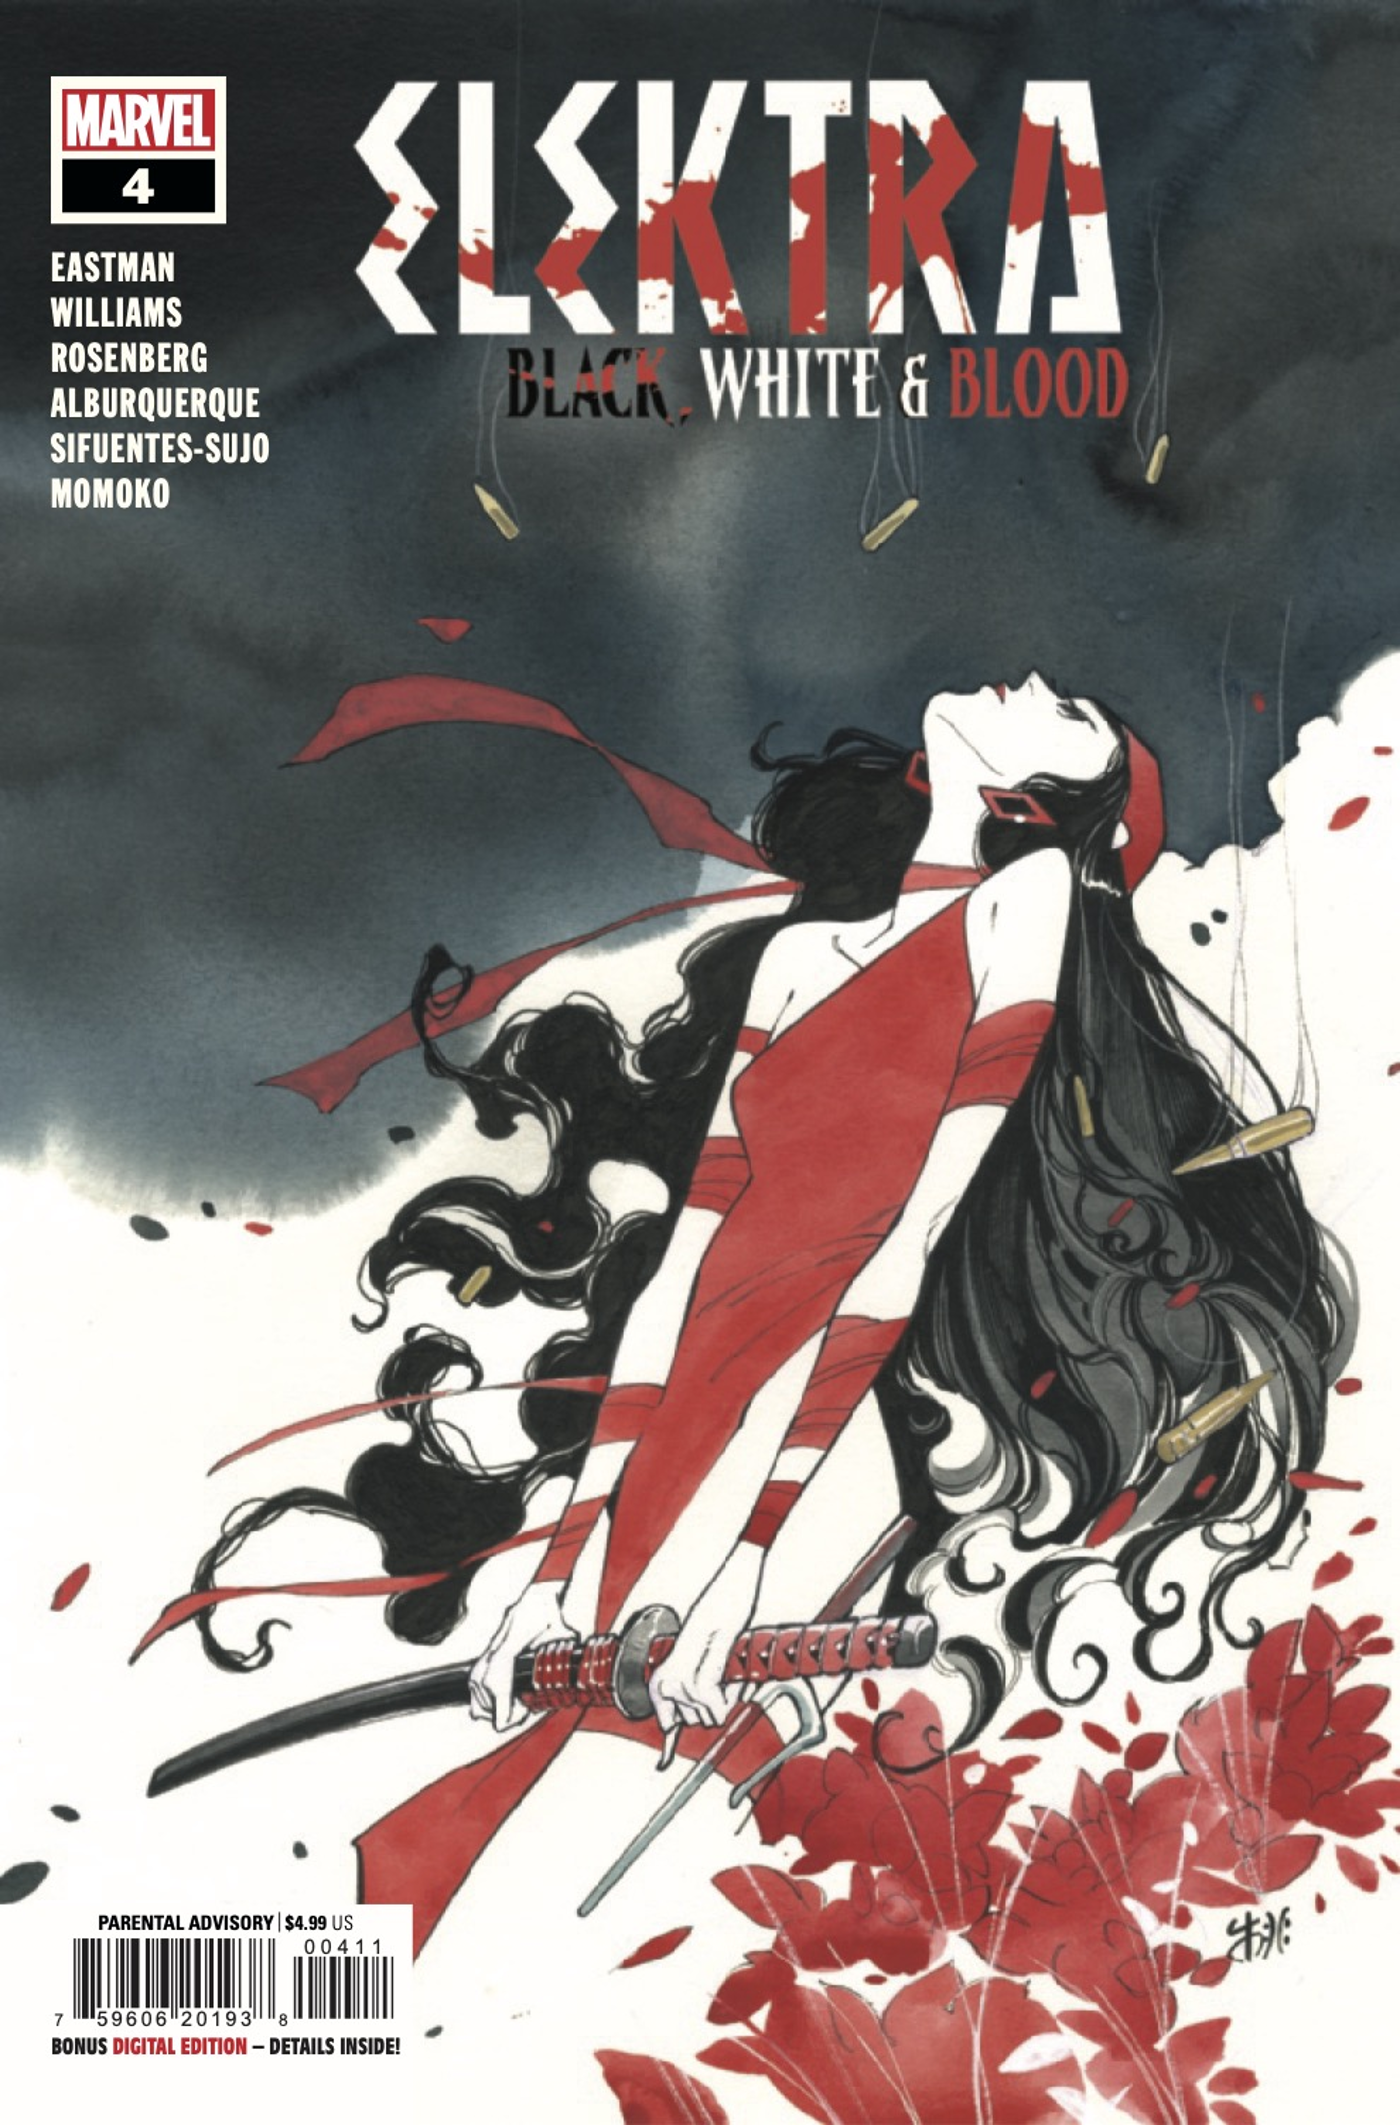 Elektra black white blood #4 cover